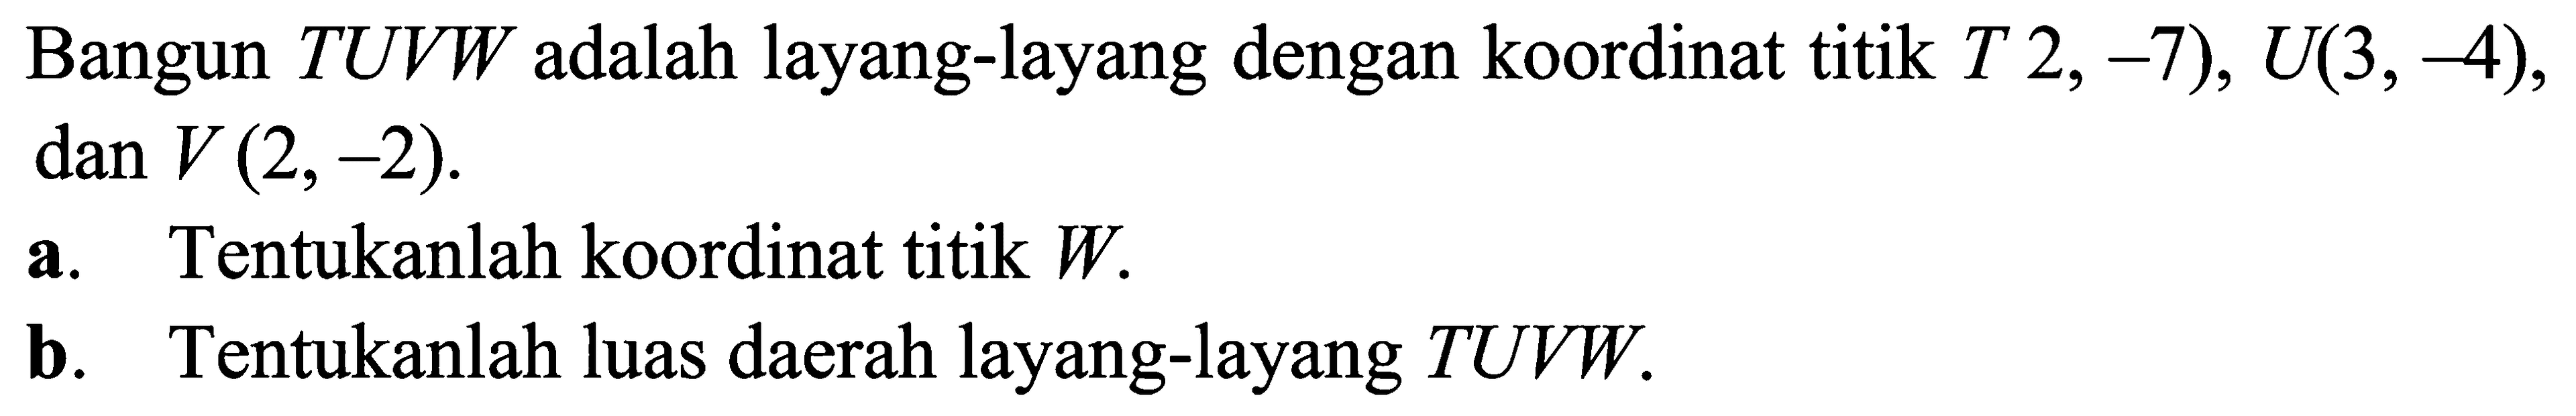 Bangun TUVW adalah layang-layang dengan koordinat titik T 2, -7), U(3, -4), dan V(2, -2). a. Tentukanlah koordinat titik W. b. Tentukanlah luas daerah layang-layang TUVW.